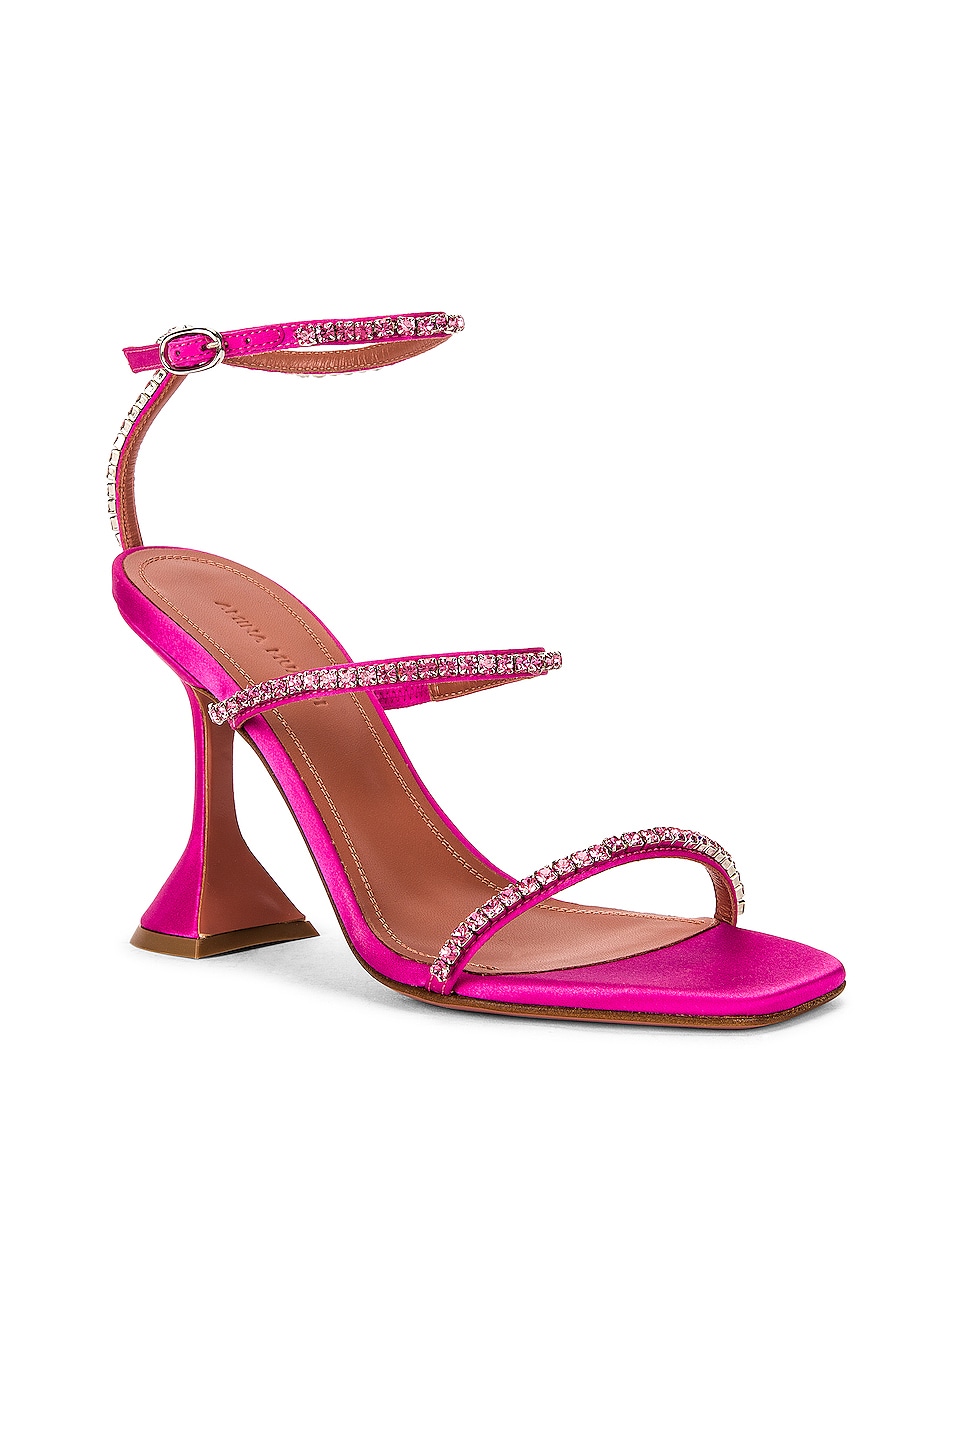 AMINA MUADDI Gilda Satin Sandal in Pink | FWRD